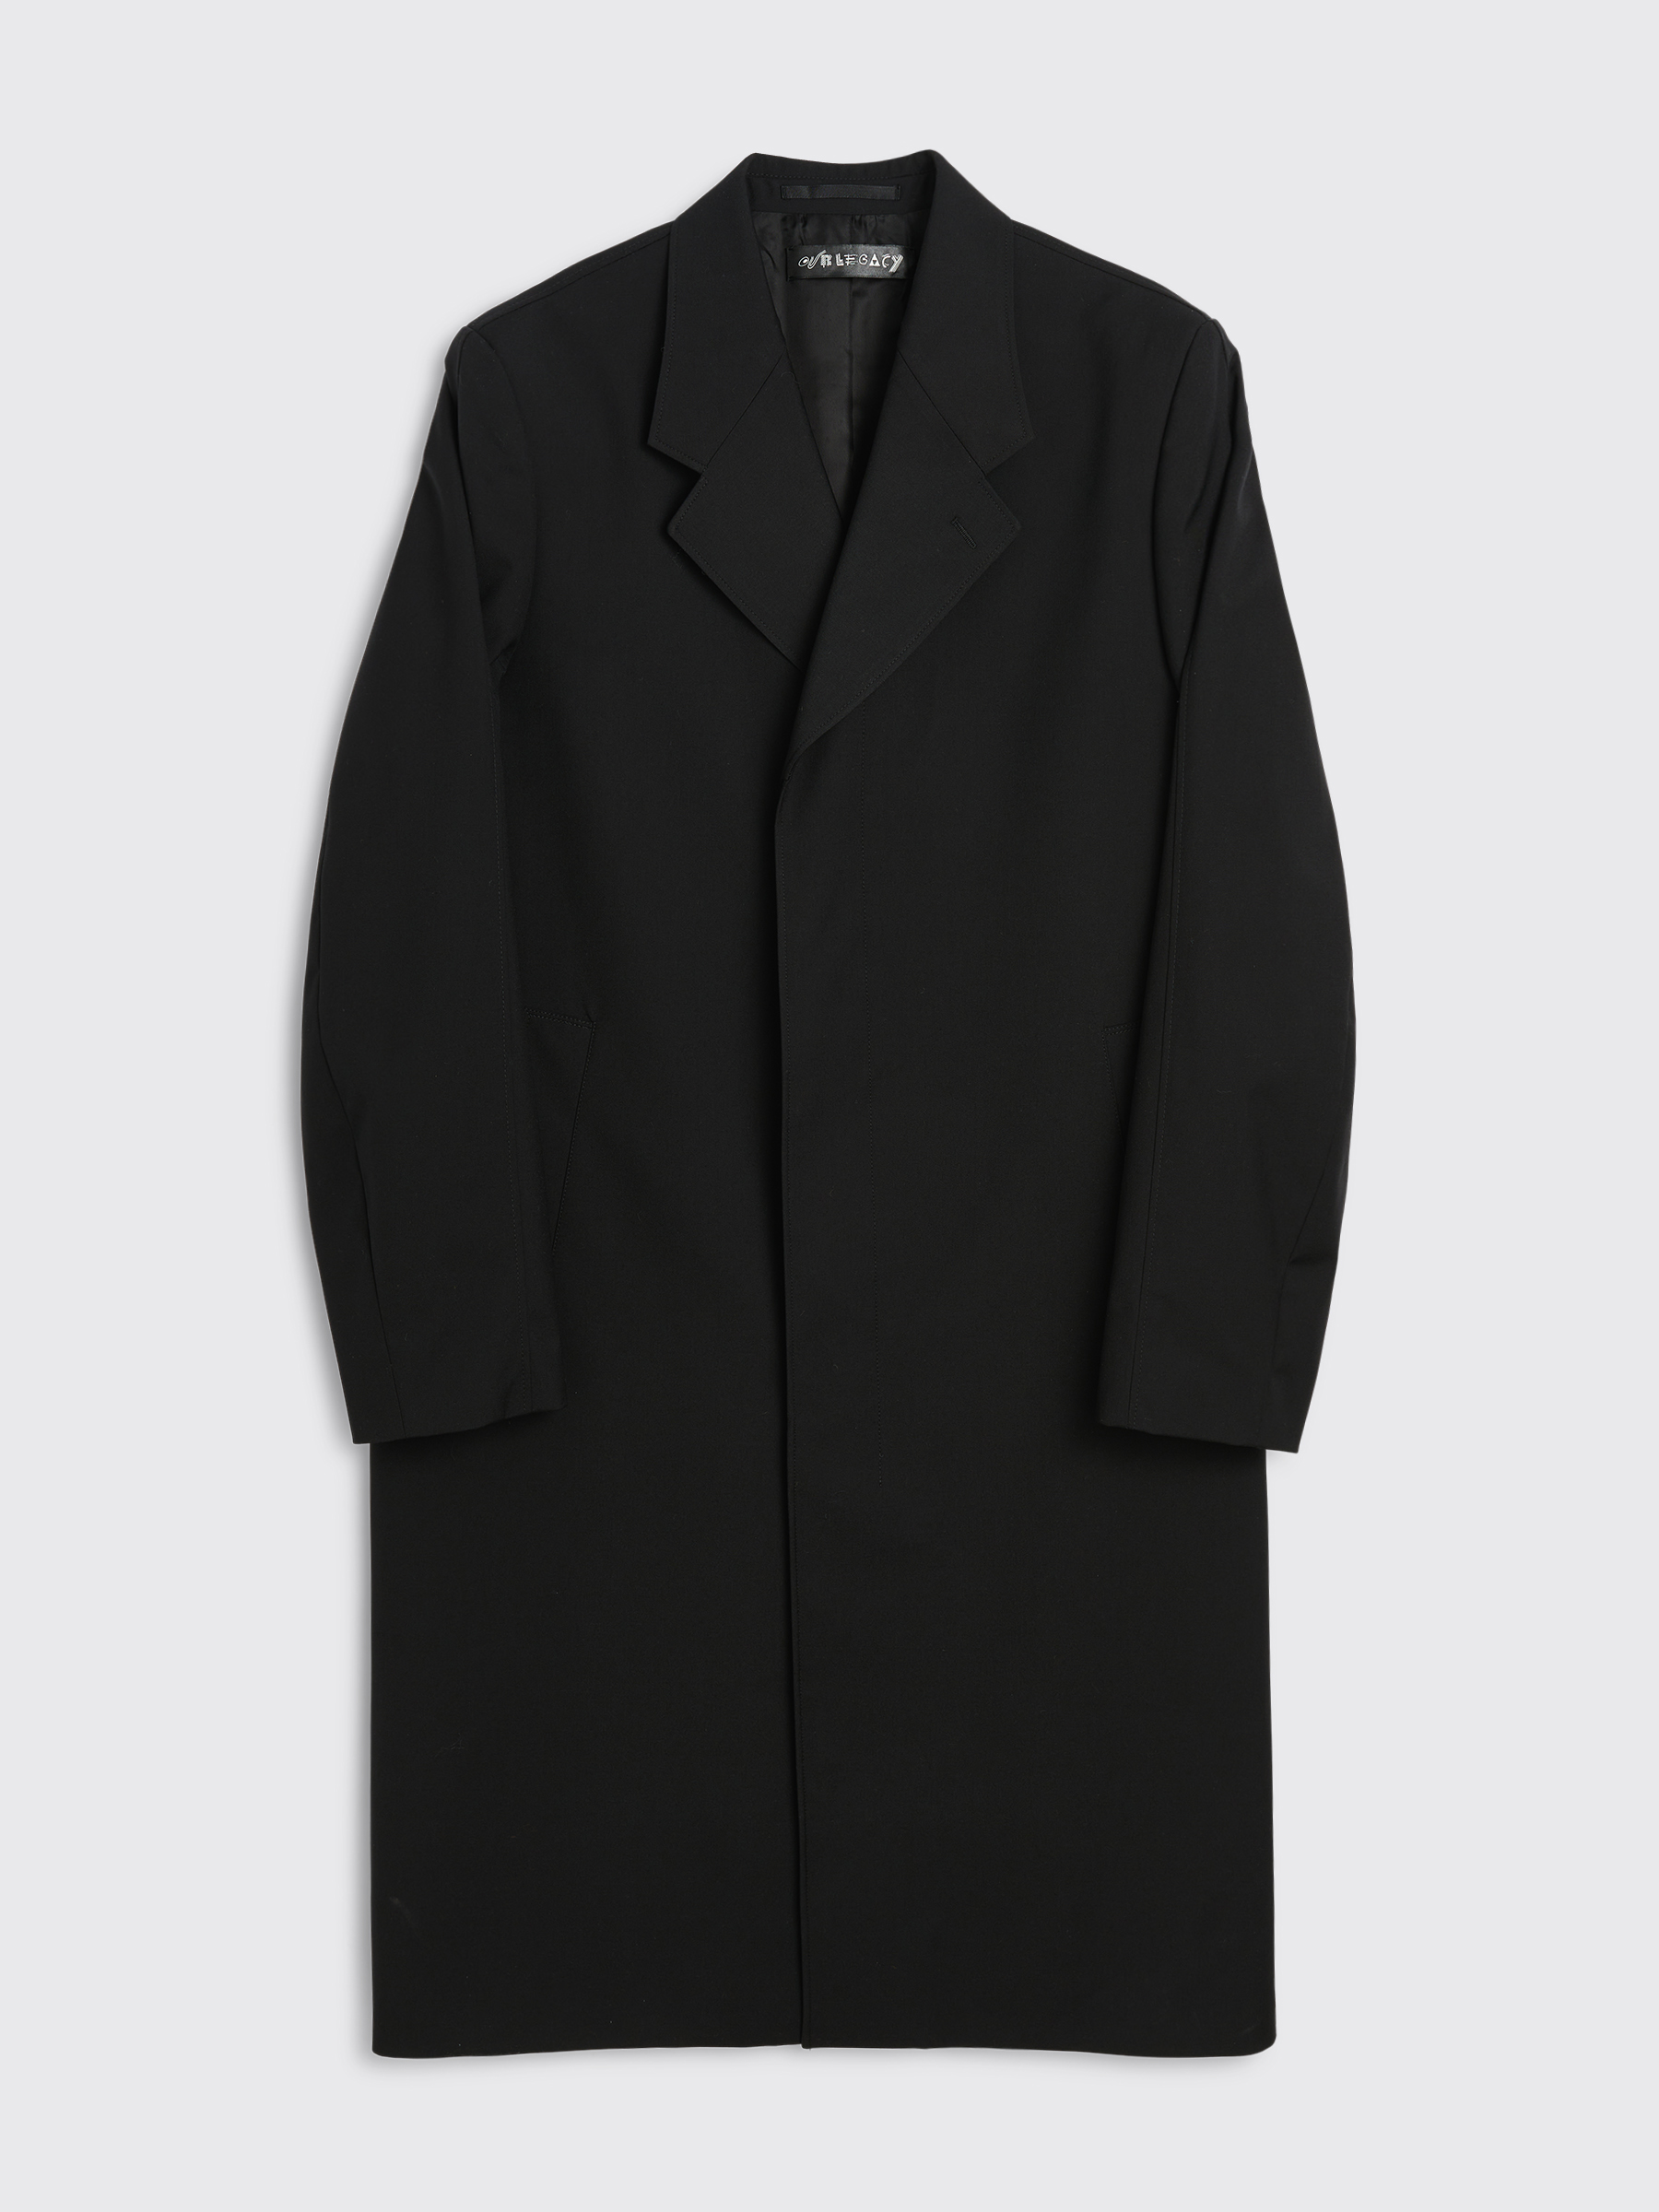 Très Bien - Our Legacy Uniform Coat Black Industrial Twill